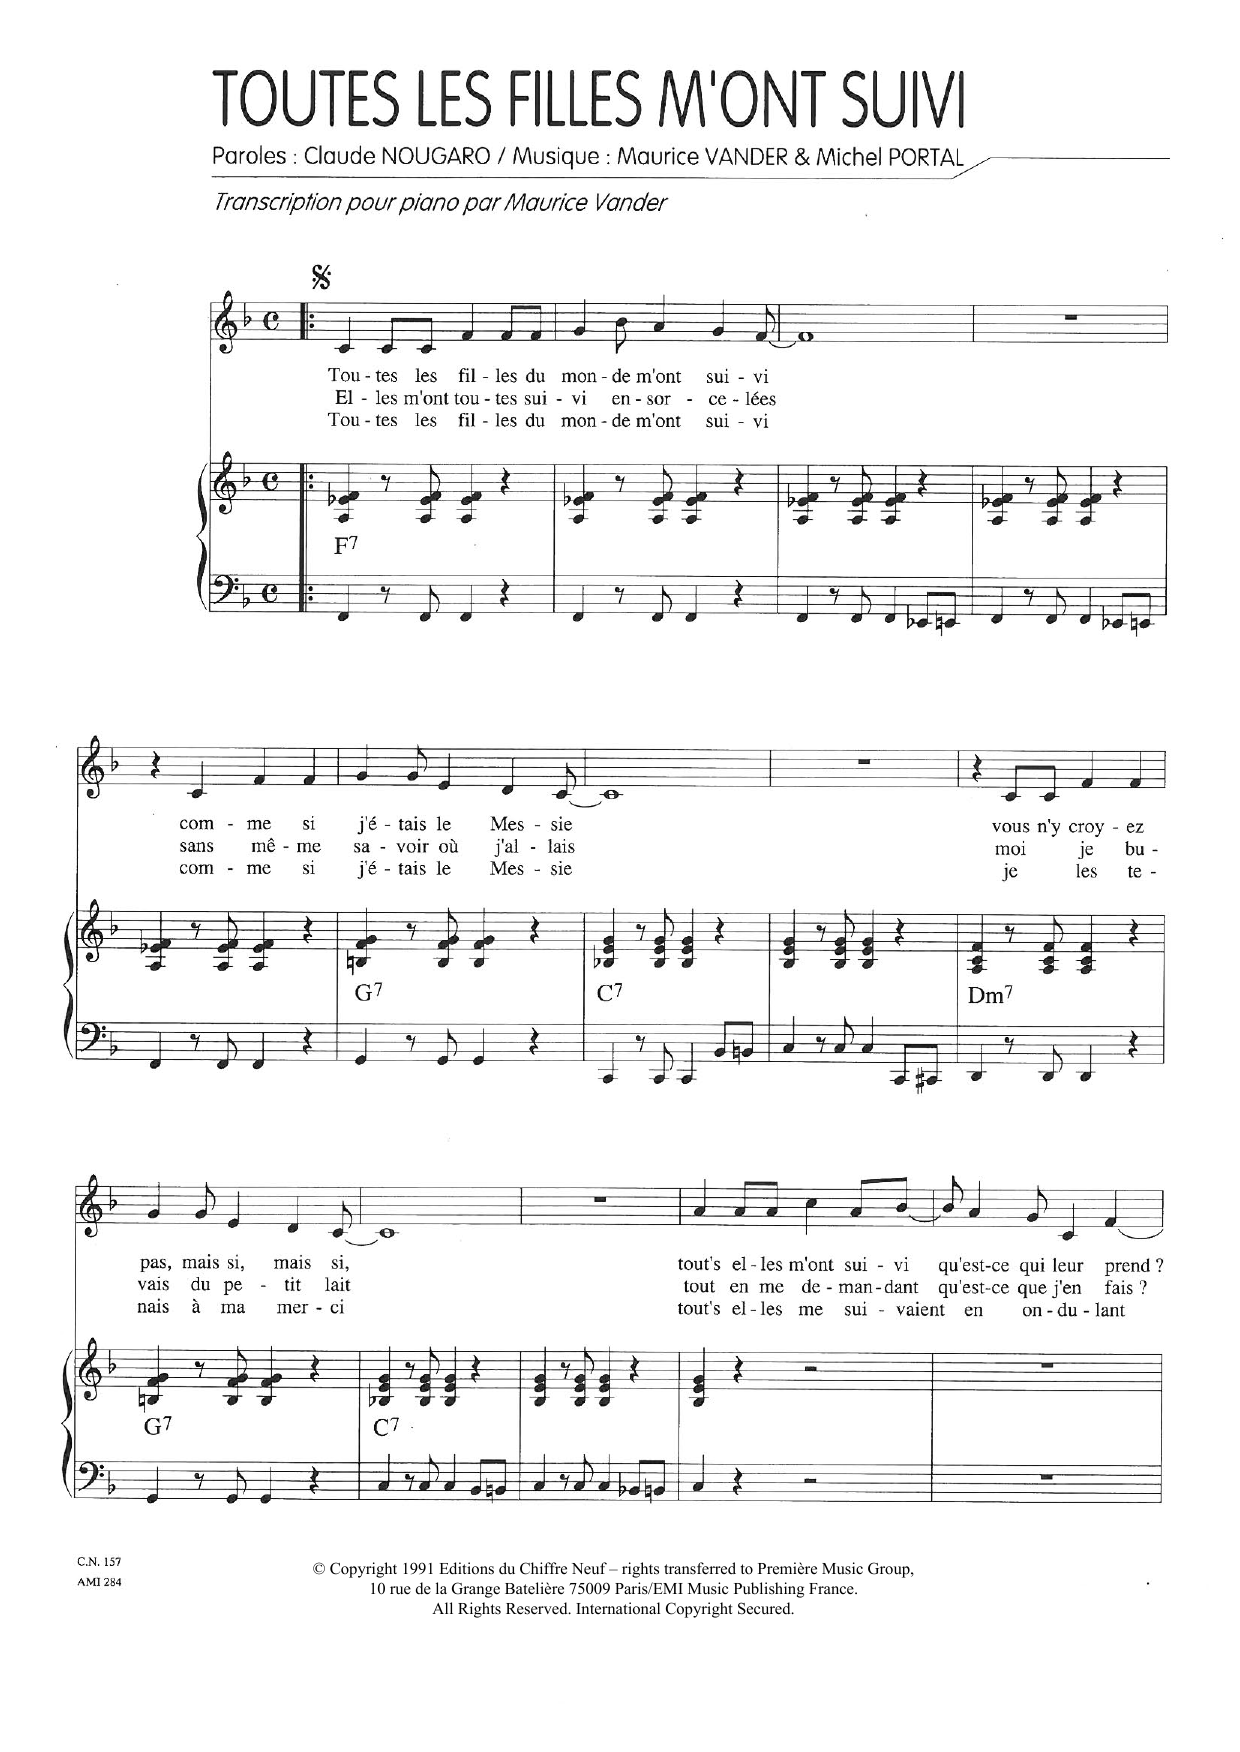 Claude Nougaro Toutes Les Filles M'ont Suivi Sheet Music Notes & Chords for Piano & Vocal - Download or Print PDF